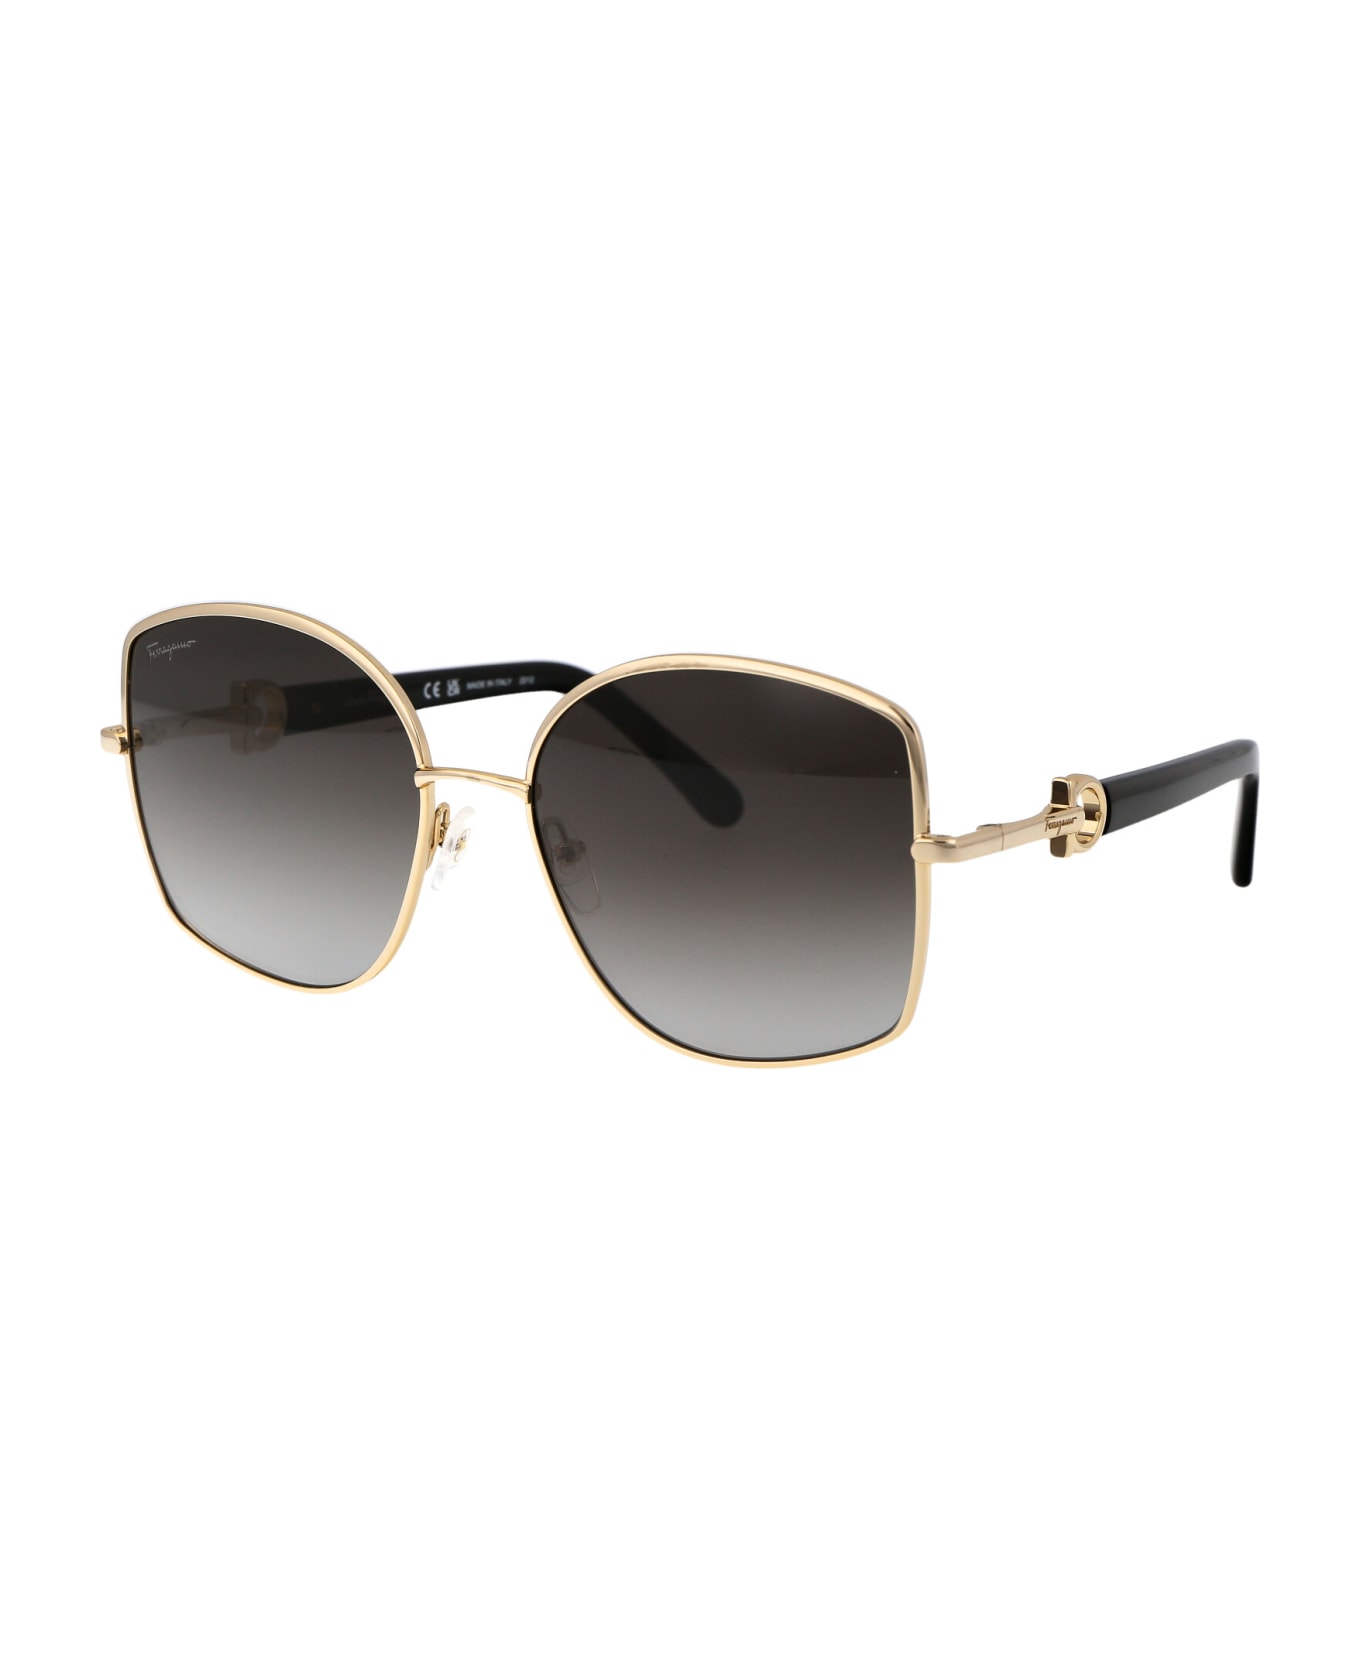 Salvatore Ferragamo Eyewear Sf304s Sunglasses - 738 GOLD